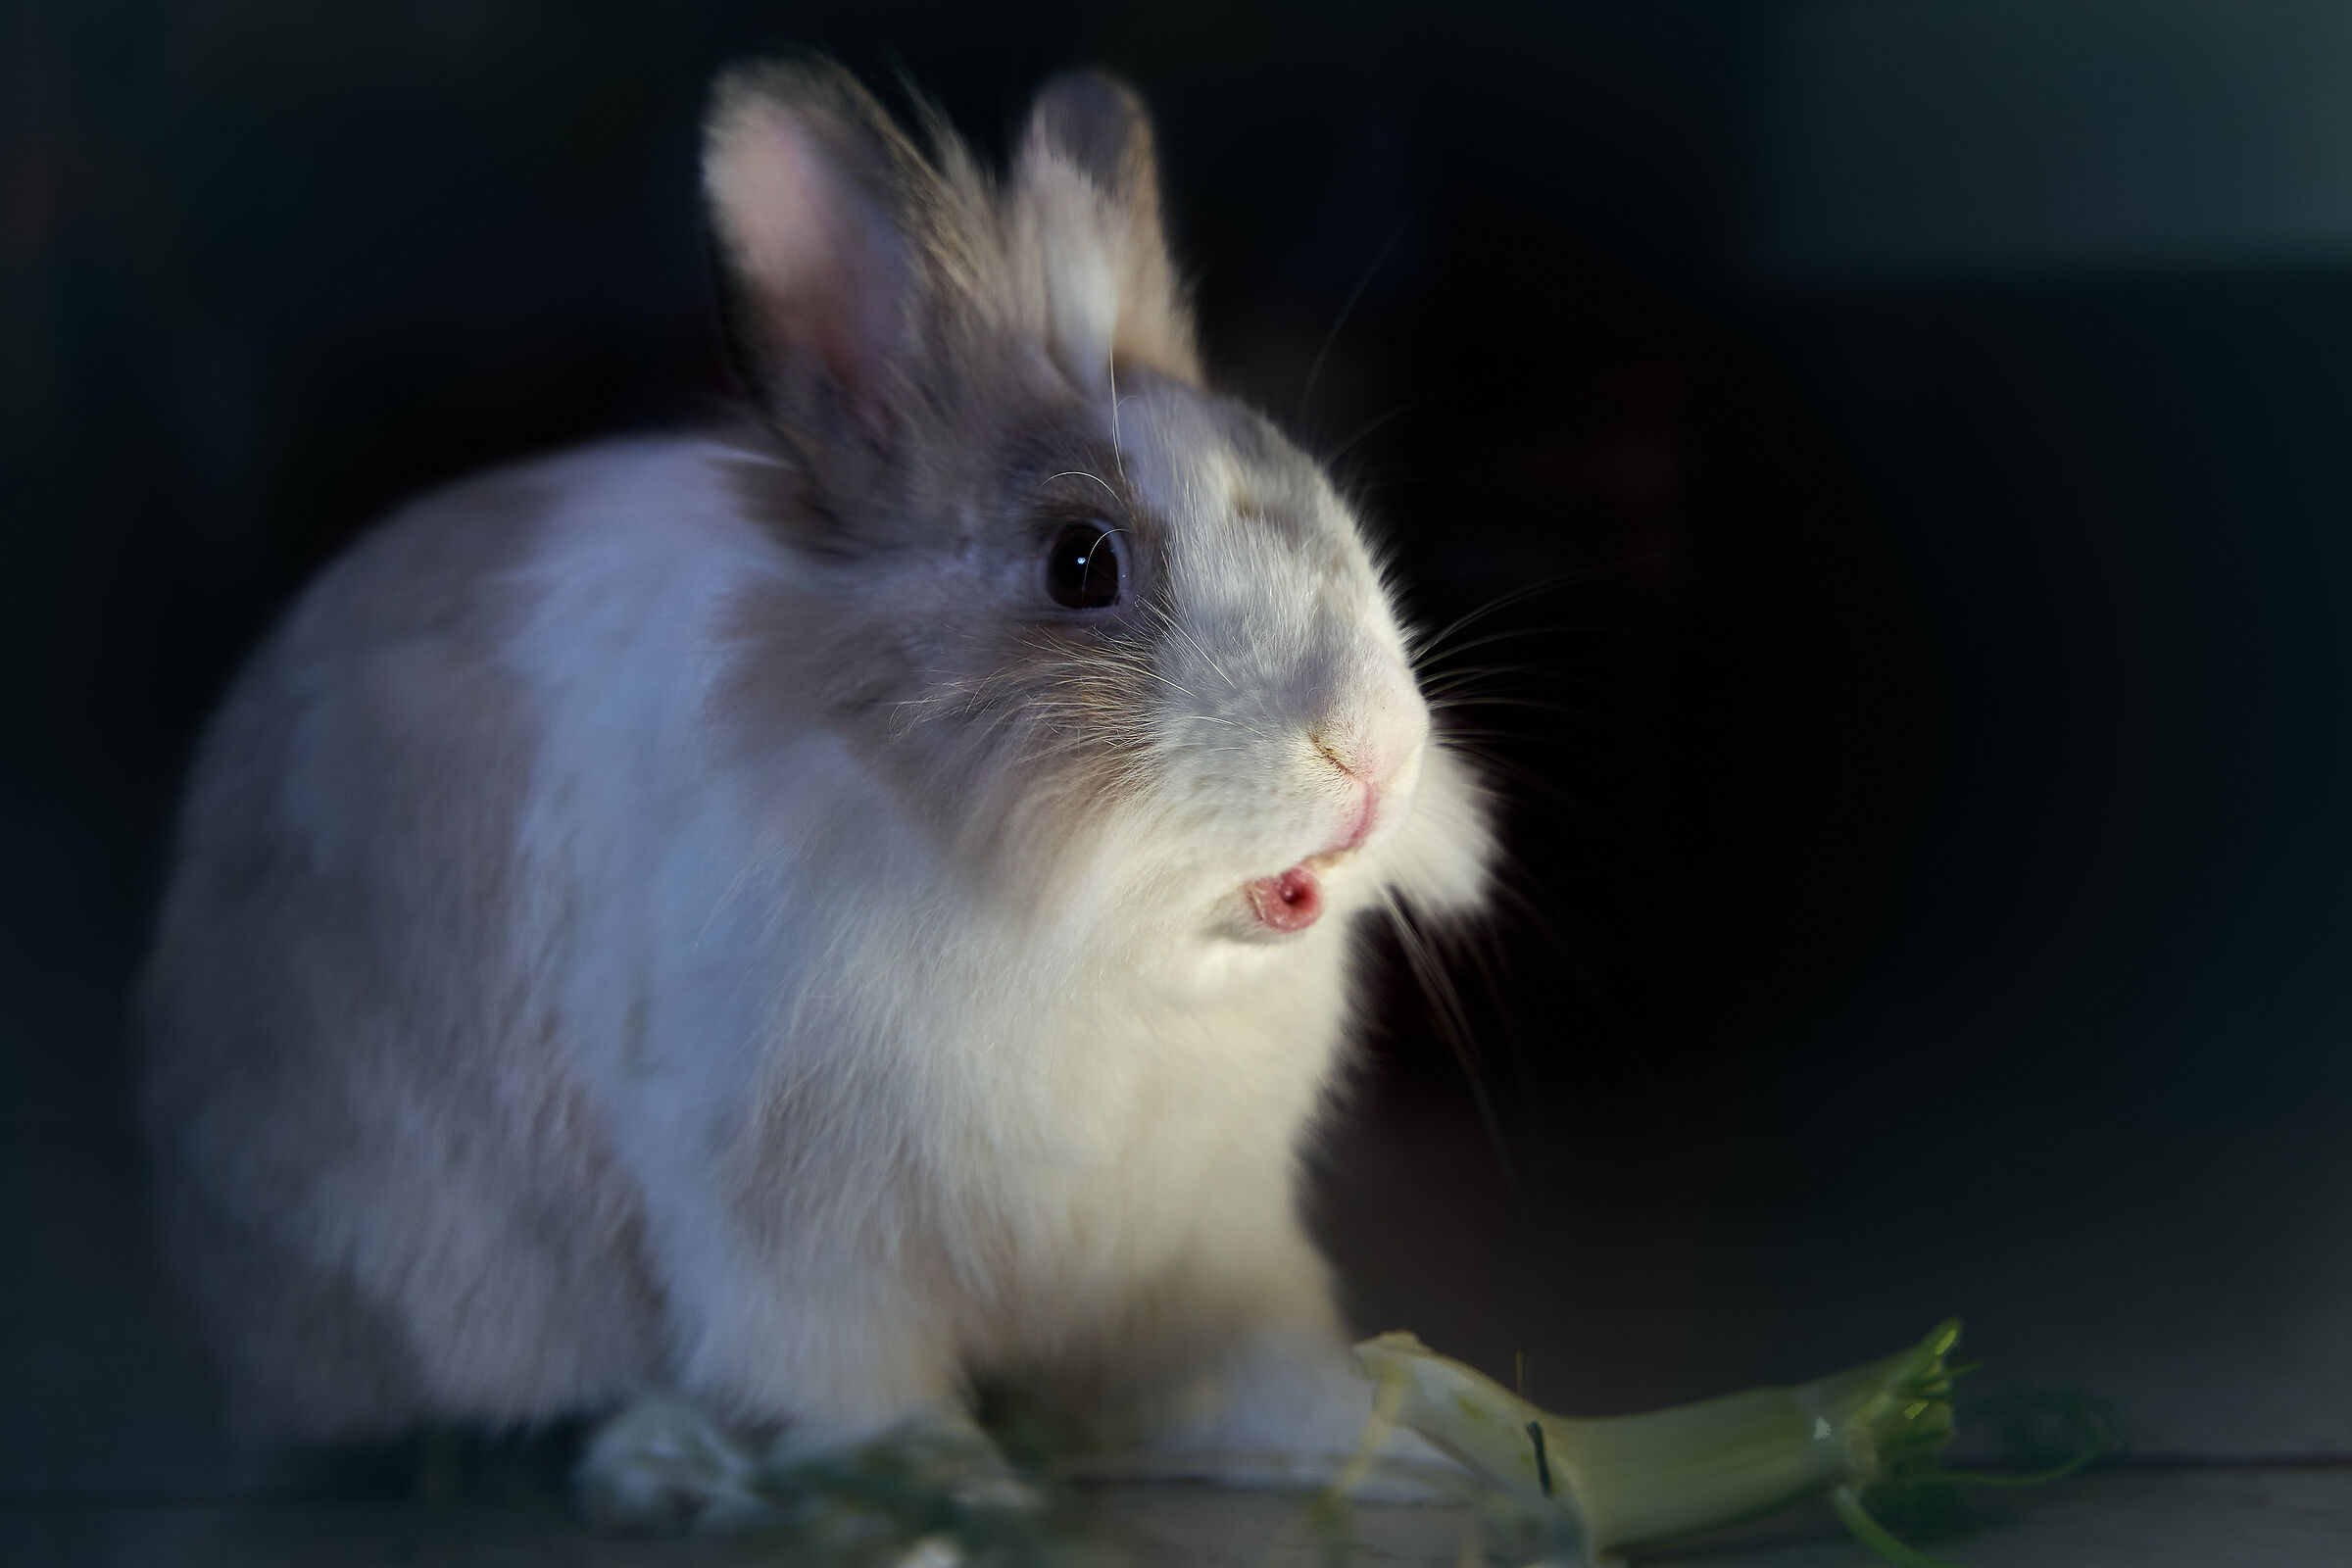 The astonishment of a rabbit...